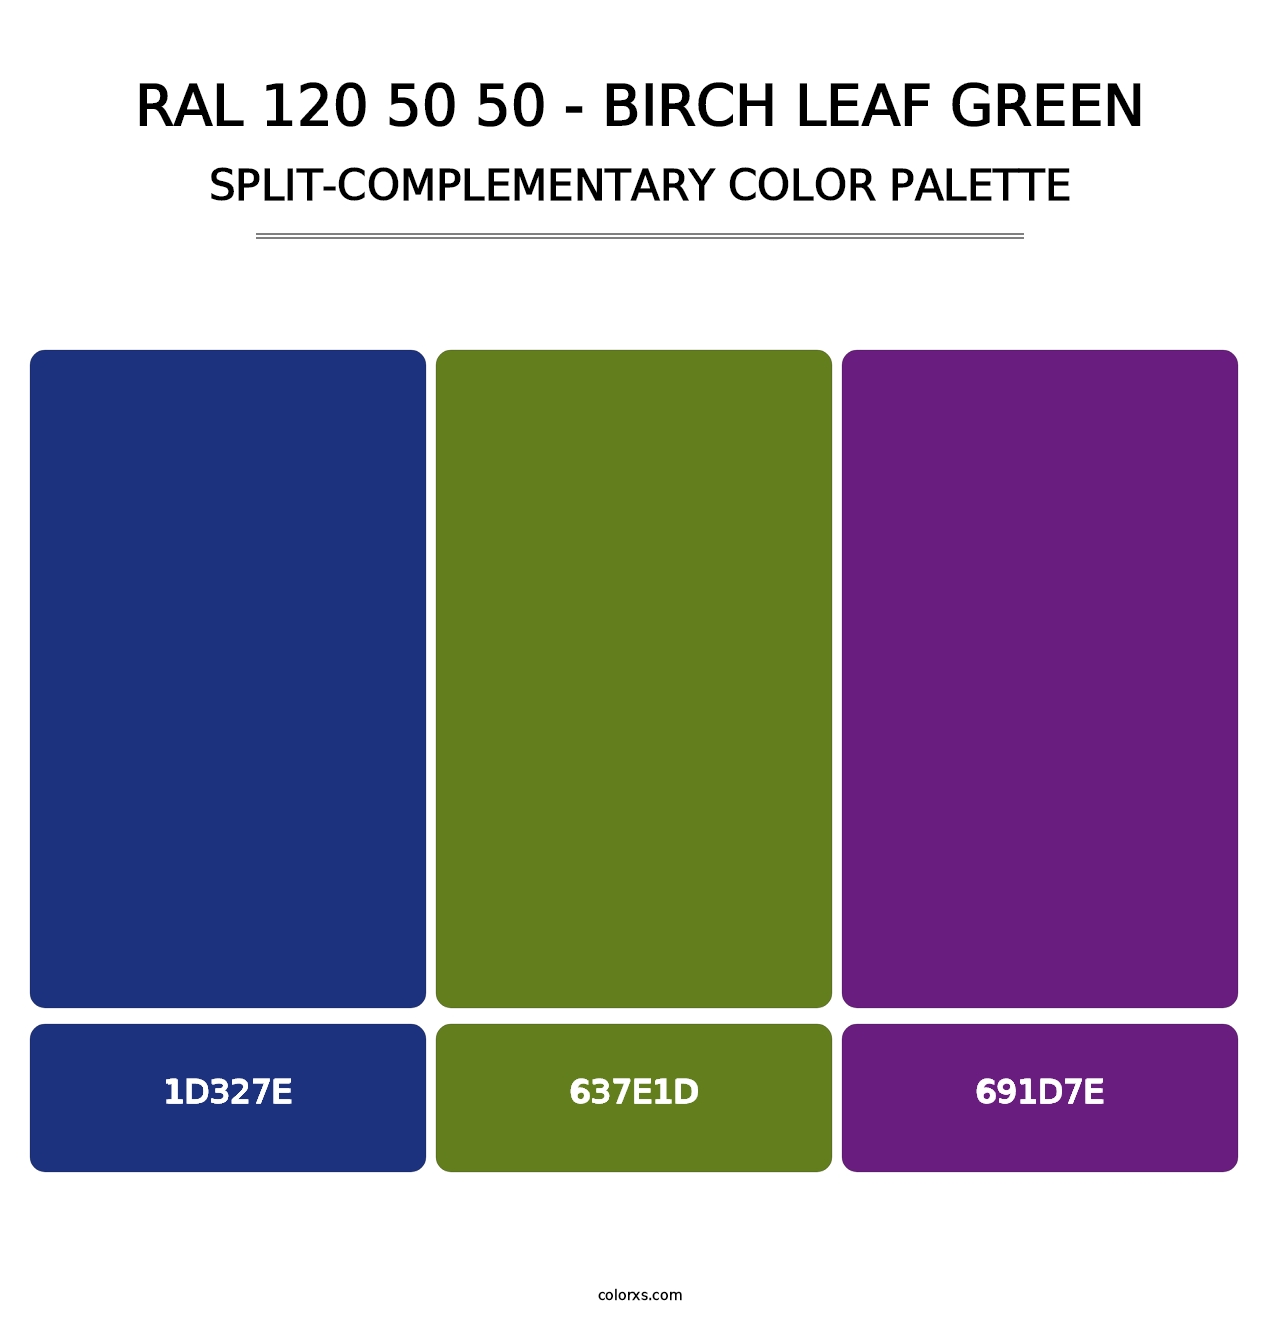 RAL 120 50 50 - Birch Leaf Green - Split-Complementary Color Palette